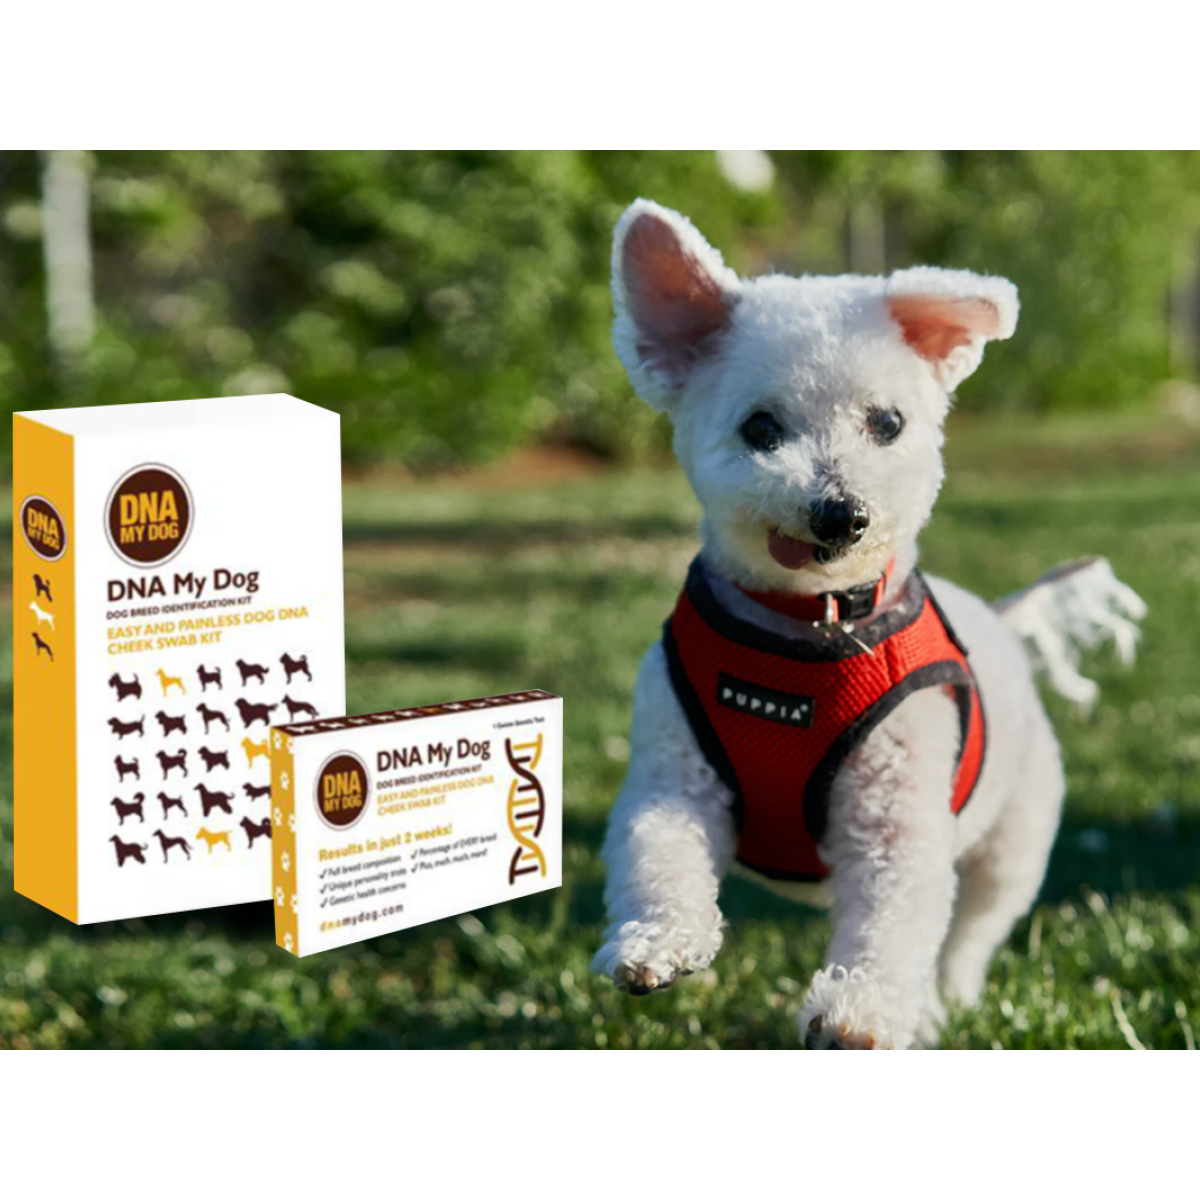 DNA My Dog Breed Identification Kit